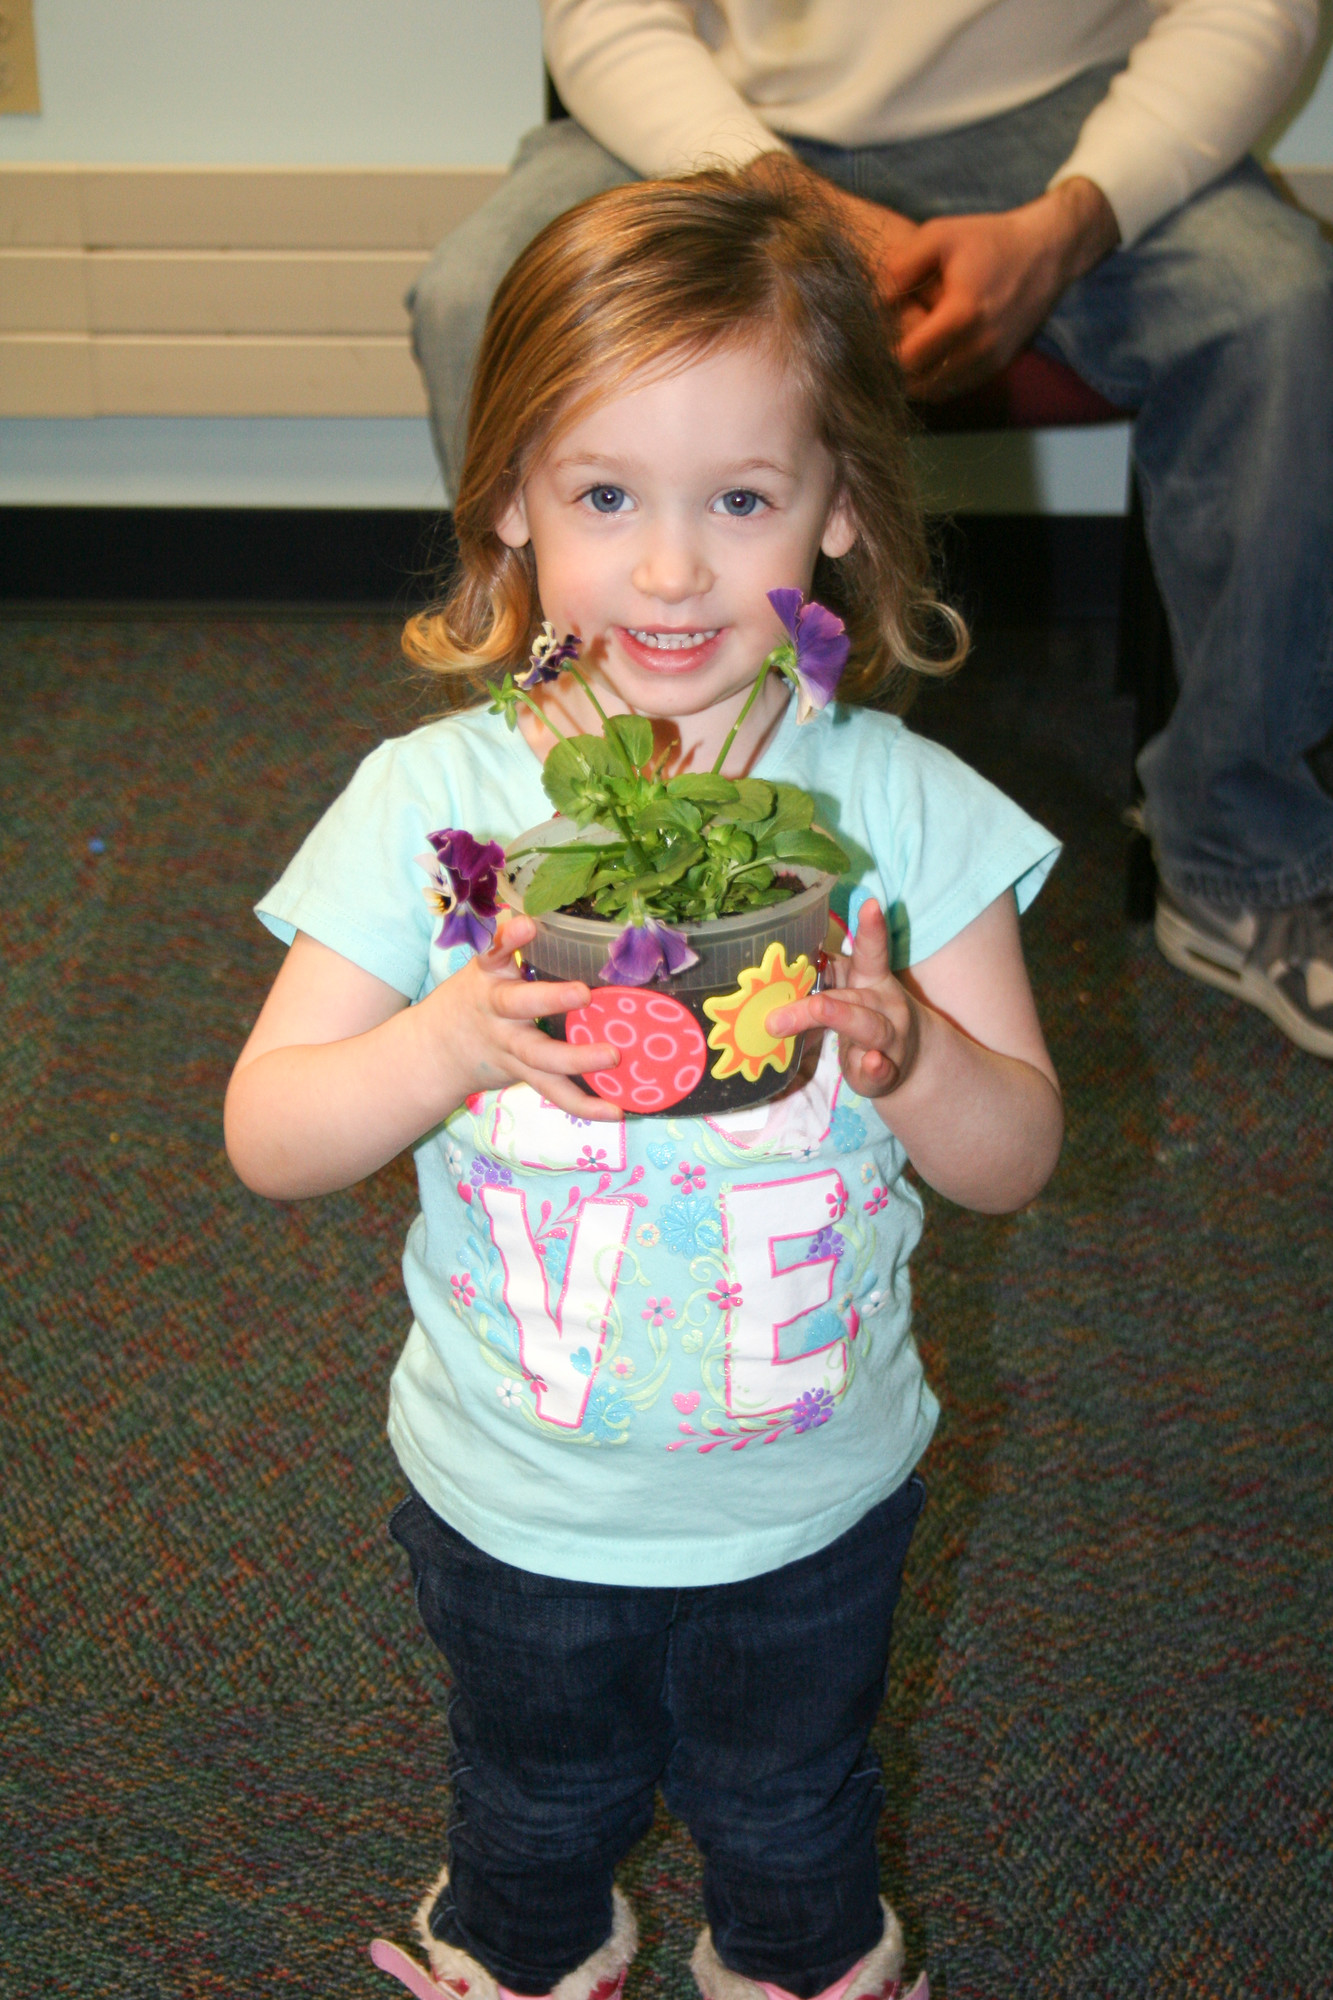 Ava Galati, 3, showed off her flower pot creation.